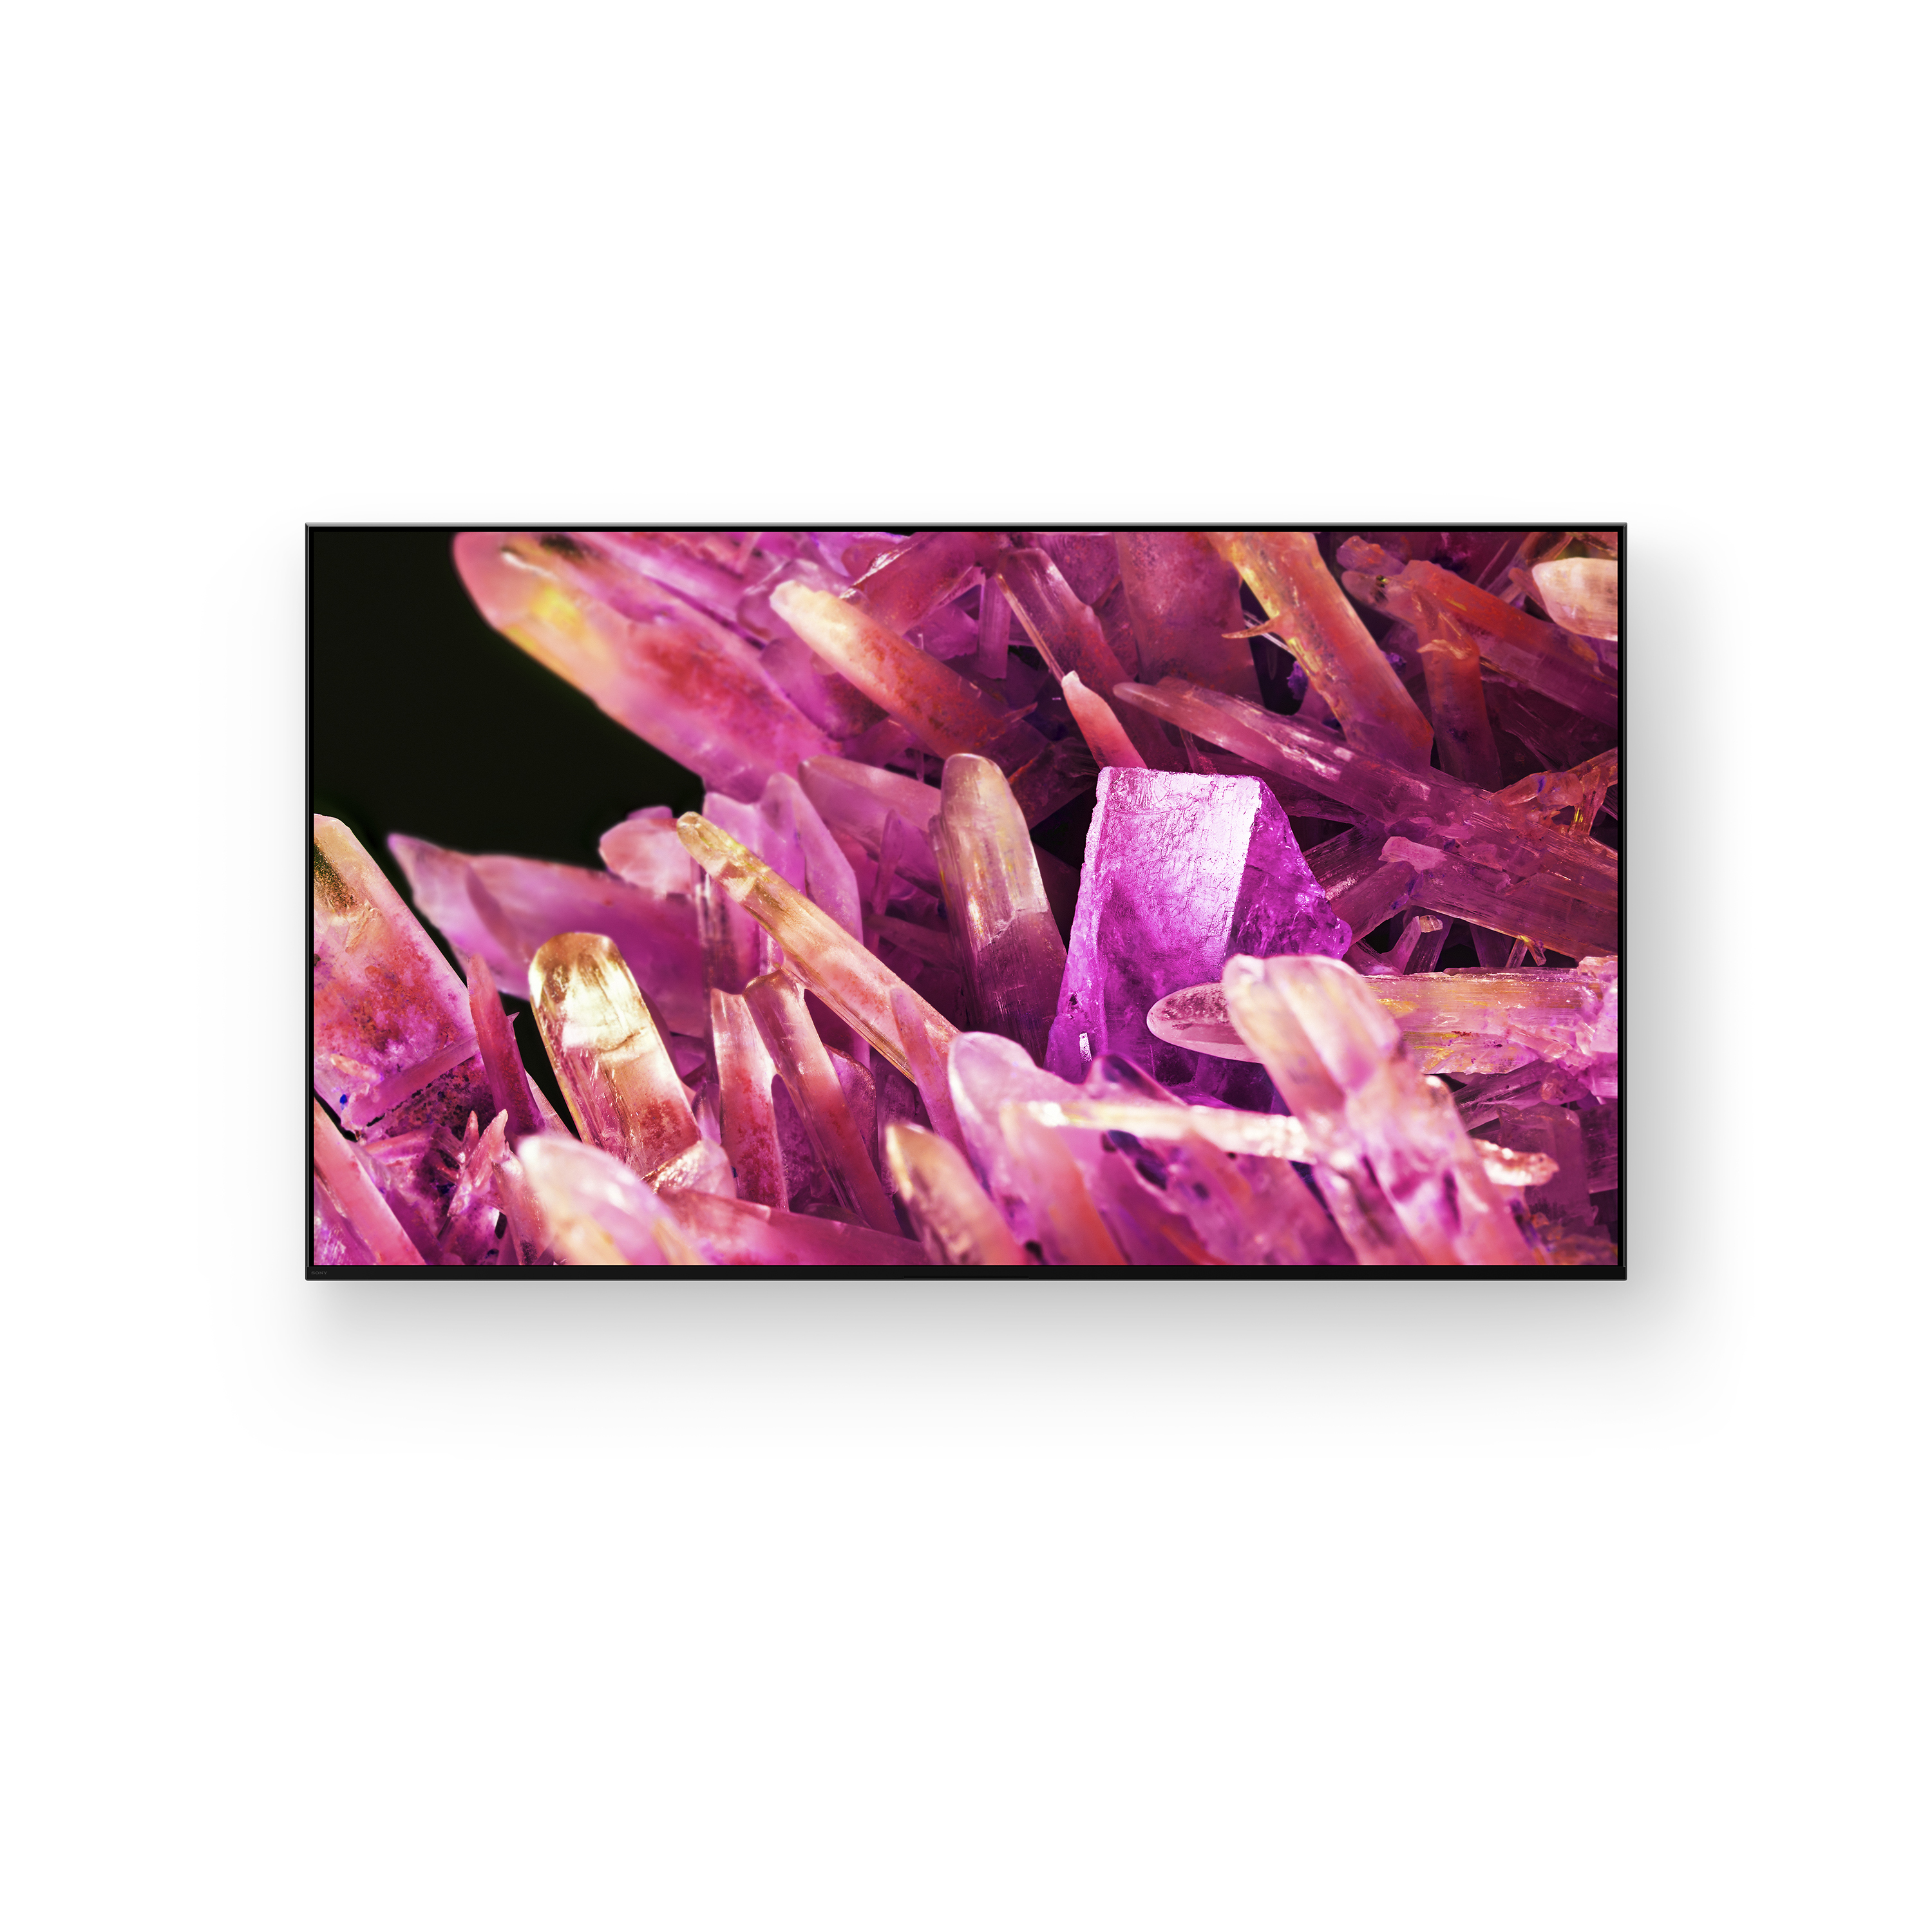 BRAVIA X90K 螢幕顯示粉紅色水晶影像的正面照